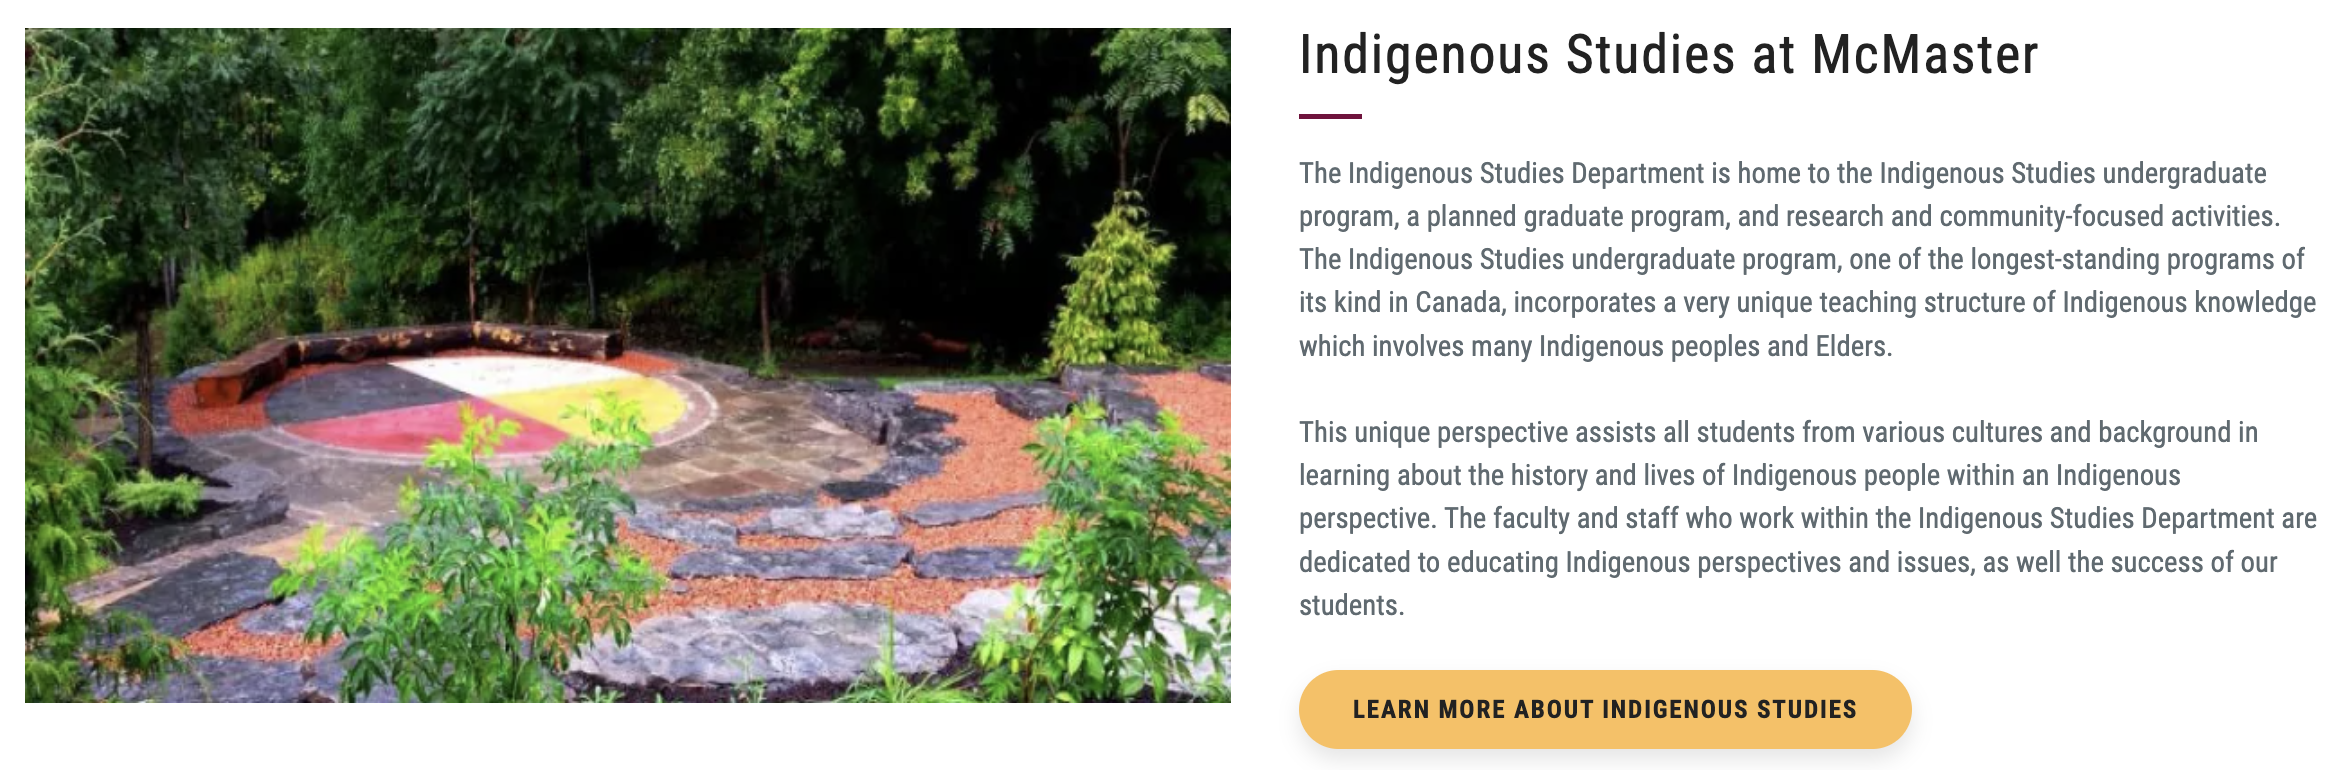 A screenshot of McMaster's Indigenous Studies Department website